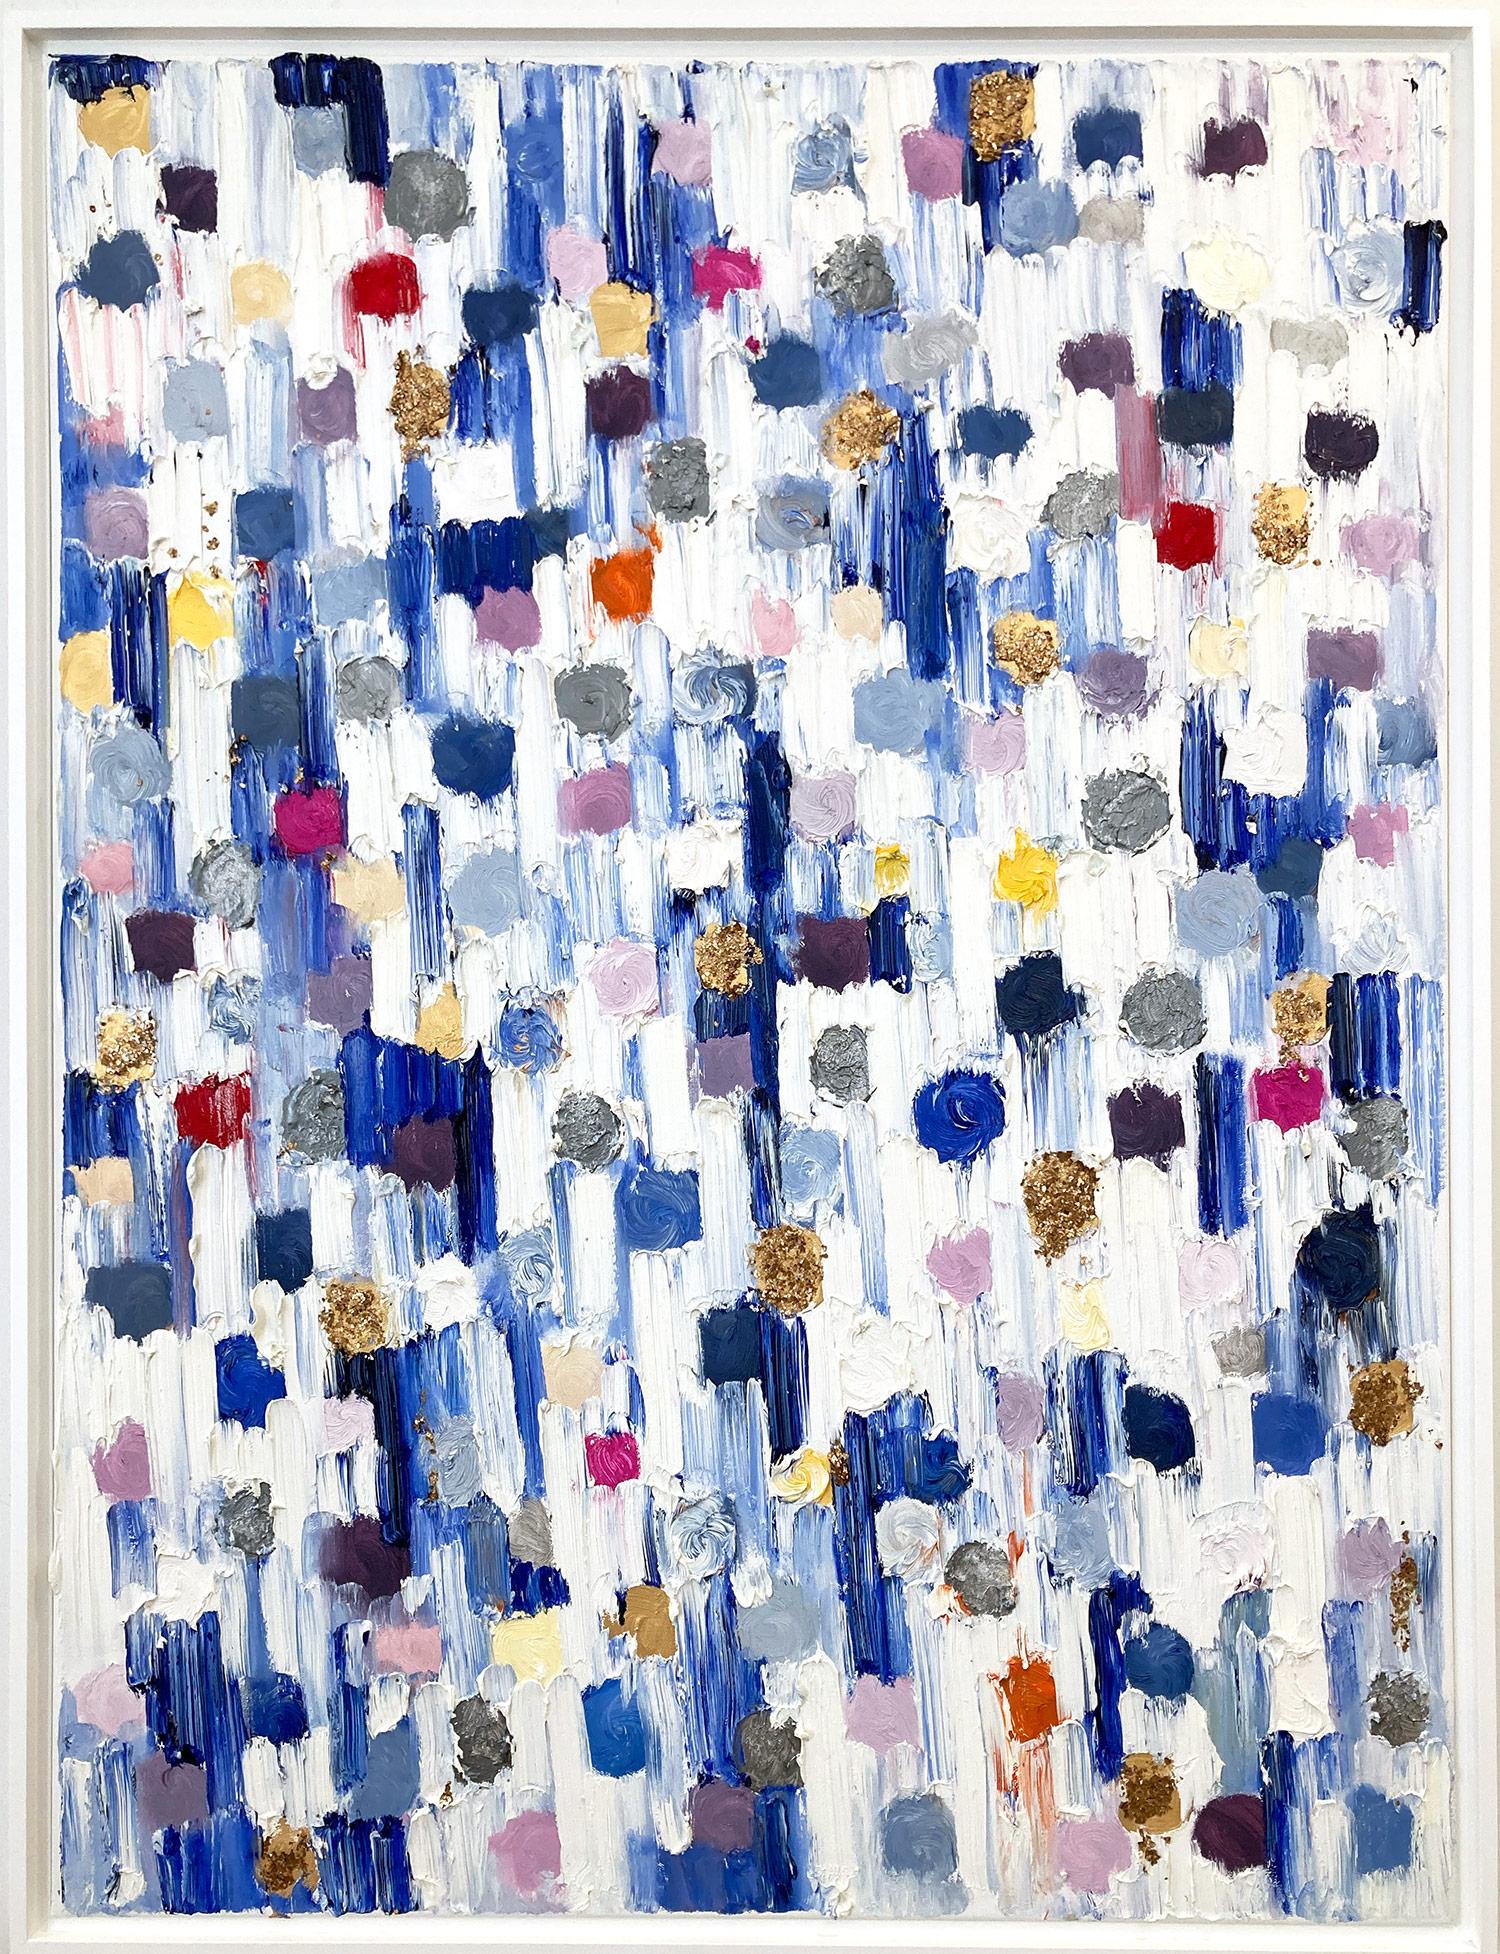 Abstract Painting Cindy Shaoul - "Dripping Dots - Capri" Multicolore Or Argent Contemporain Peinture à l'huile sur toile